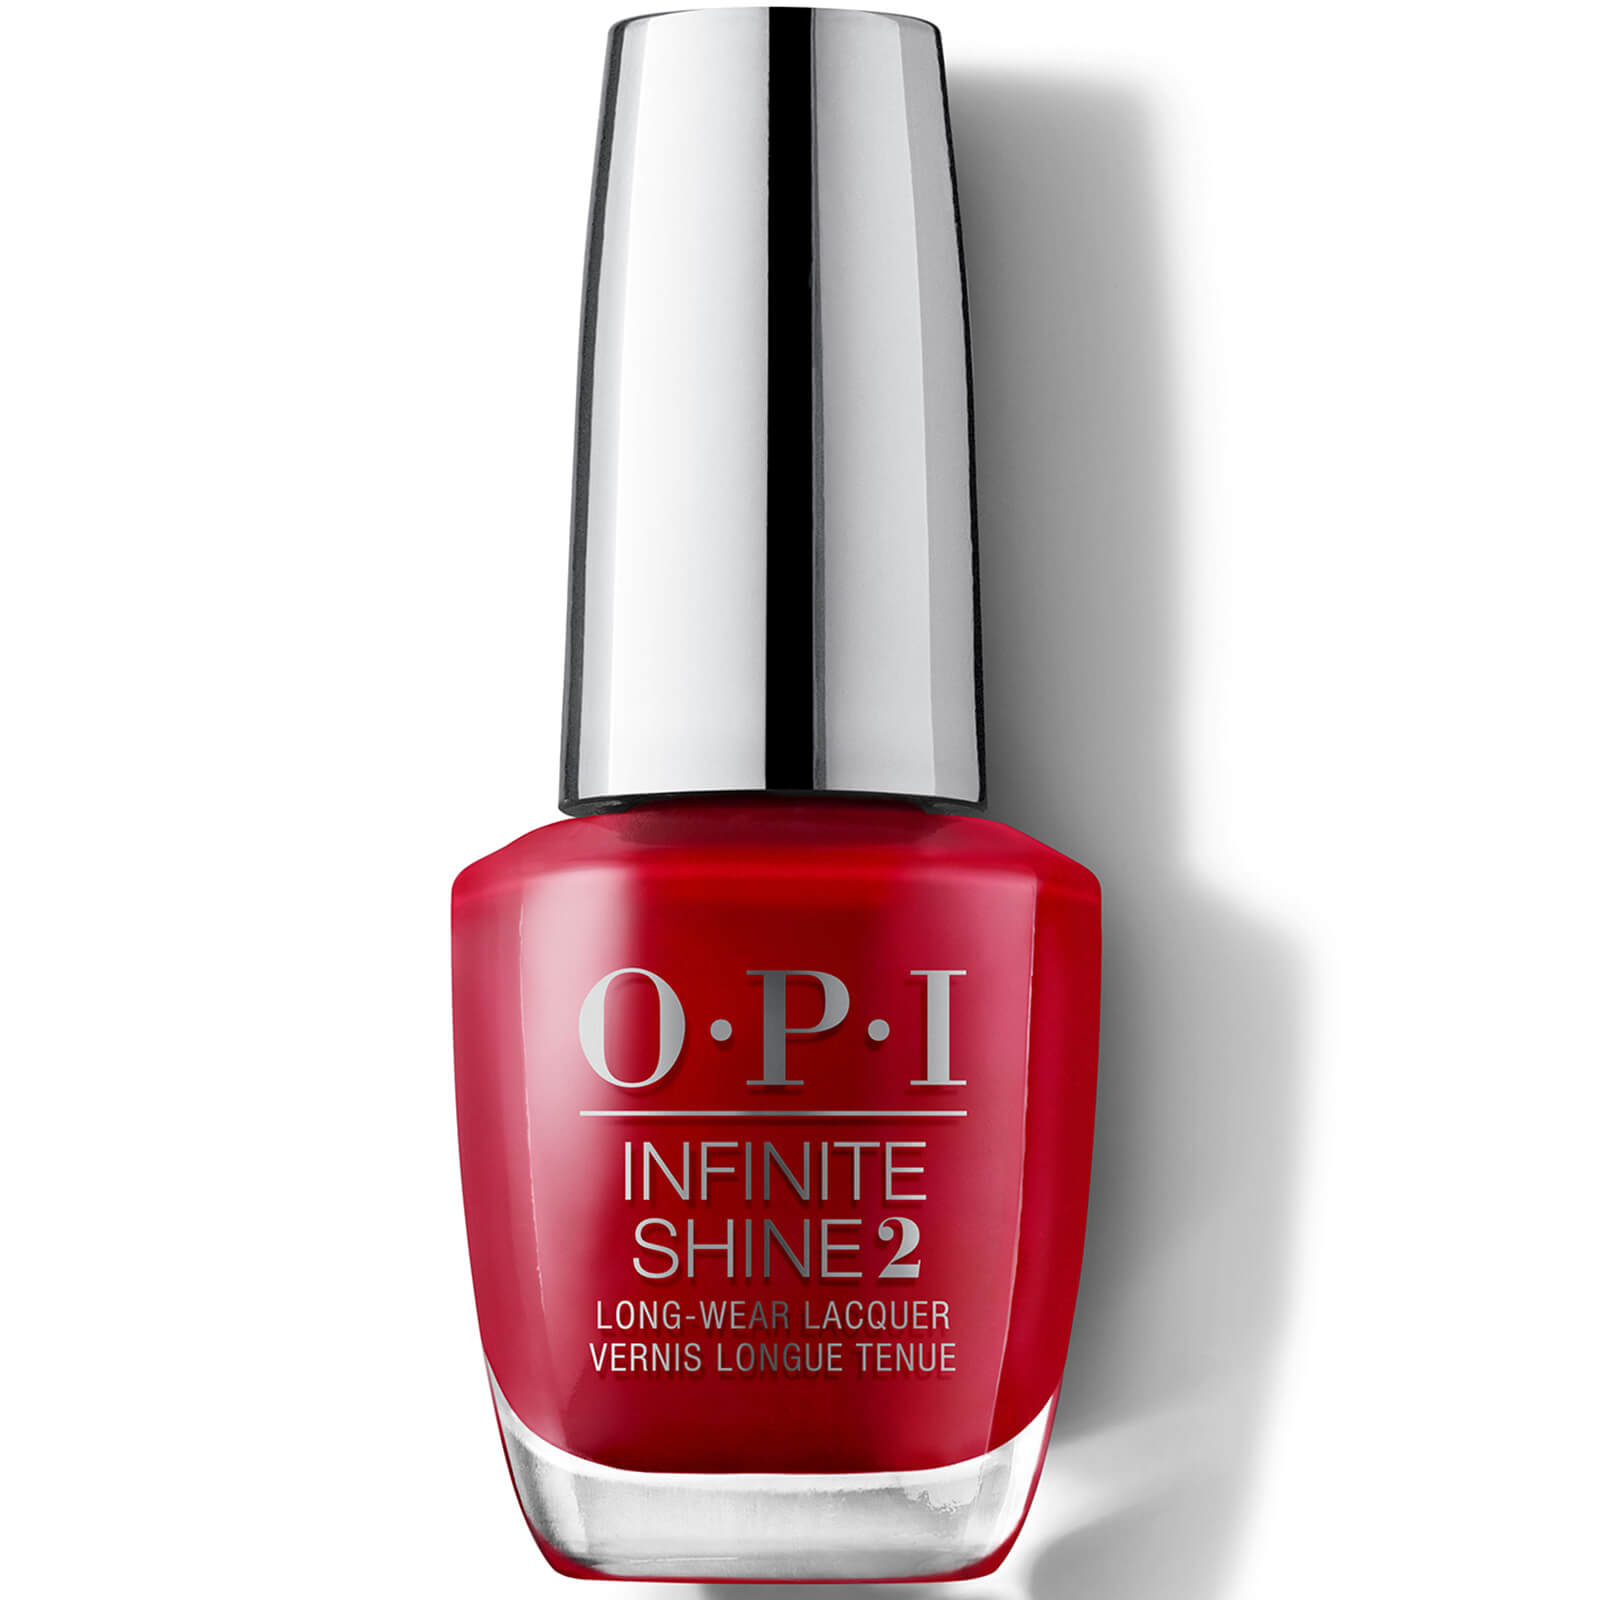 Image of OPI Infinite Shine 2 Long-Wear Gel-Like Nail Polish - Big Apple Red 15ml